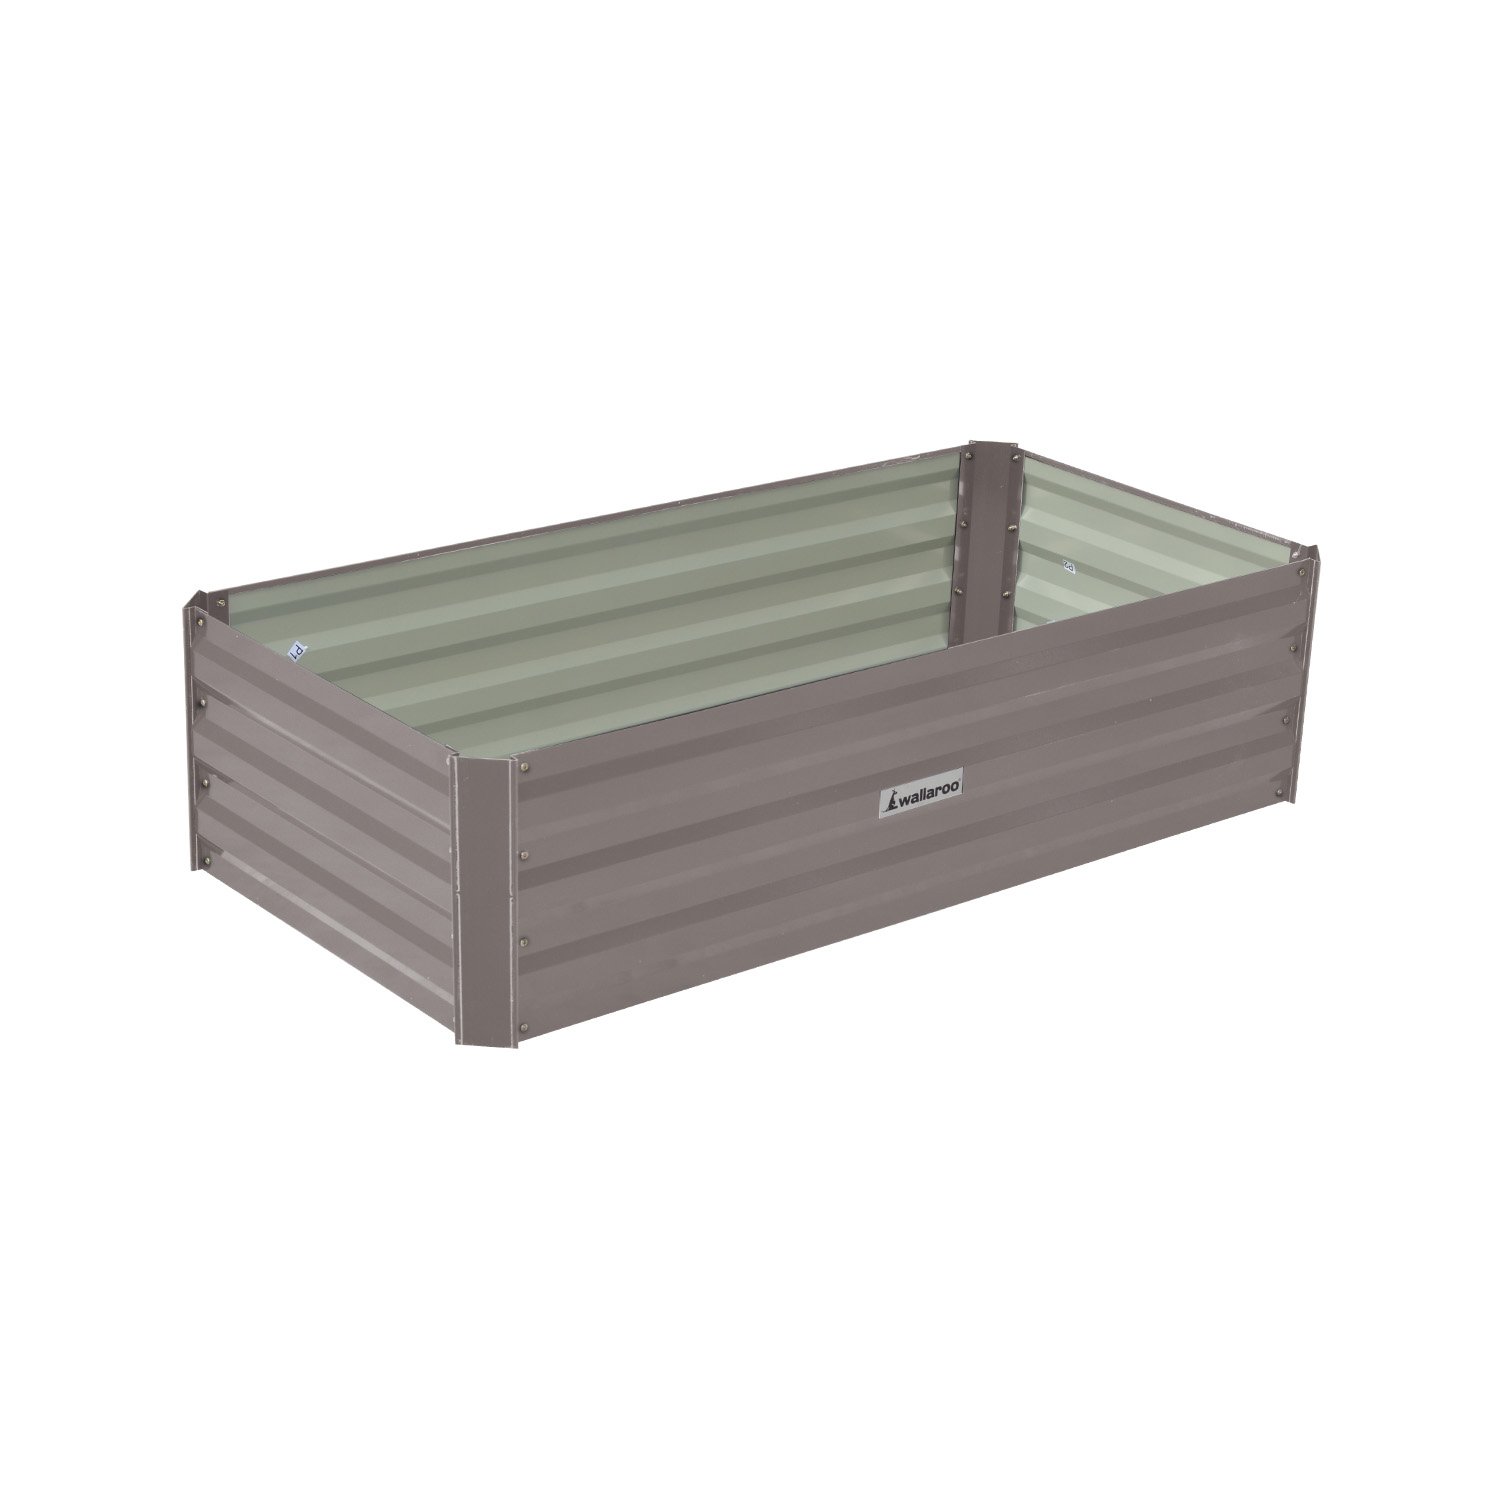 Wallaroo Garden Bed 120 x 60 x 30cm Galvanized Steel - Grey 1